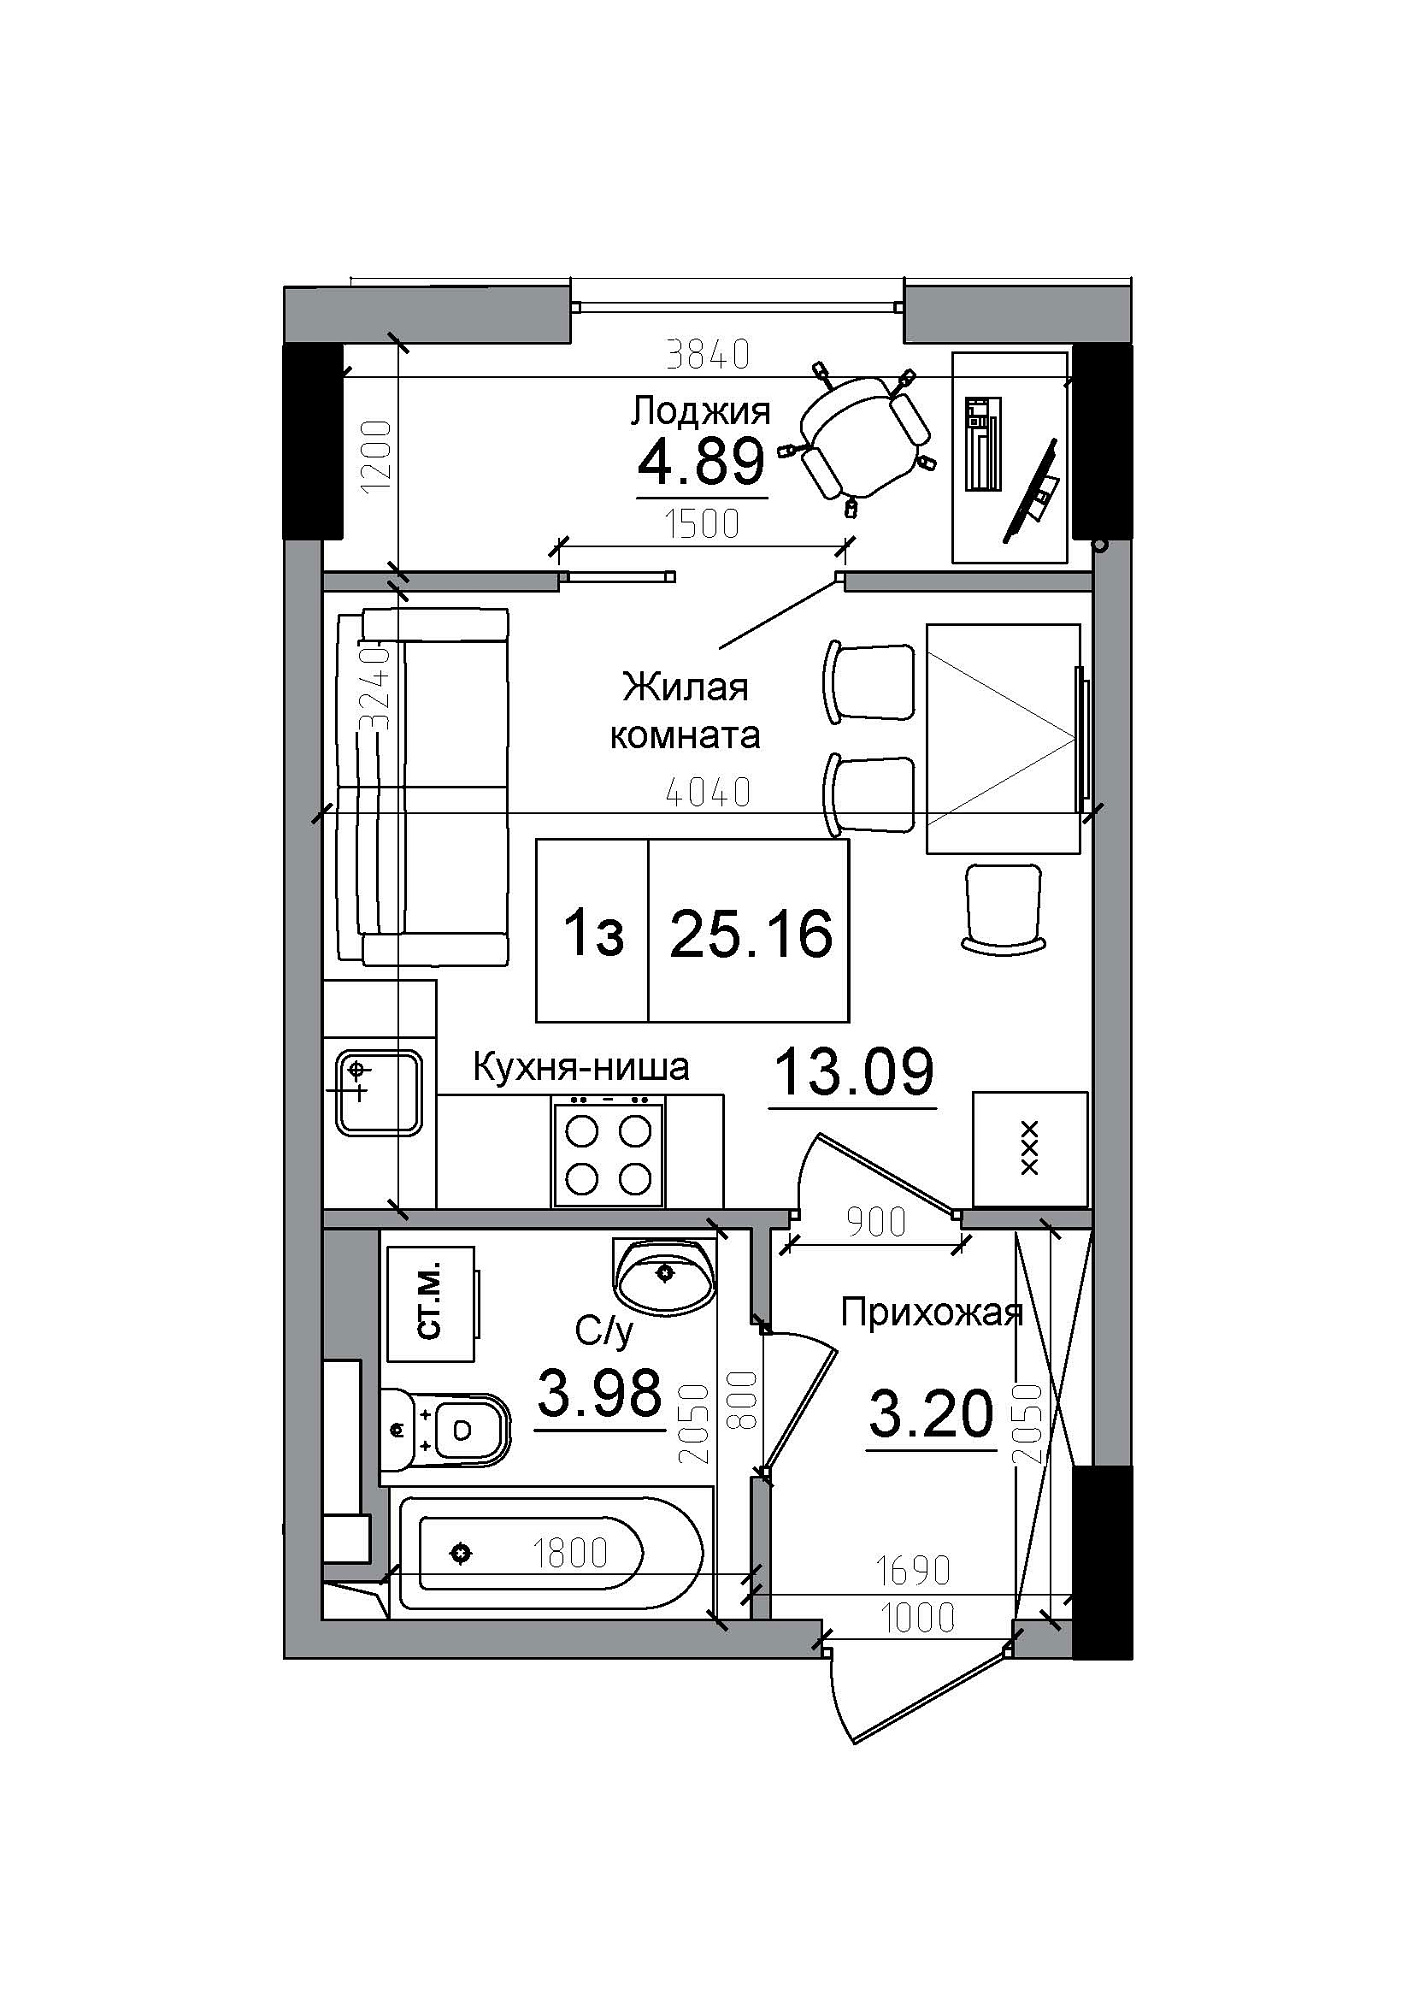 Планировка Smart-квартира площей 25.16м2, AB-12-02/00009.